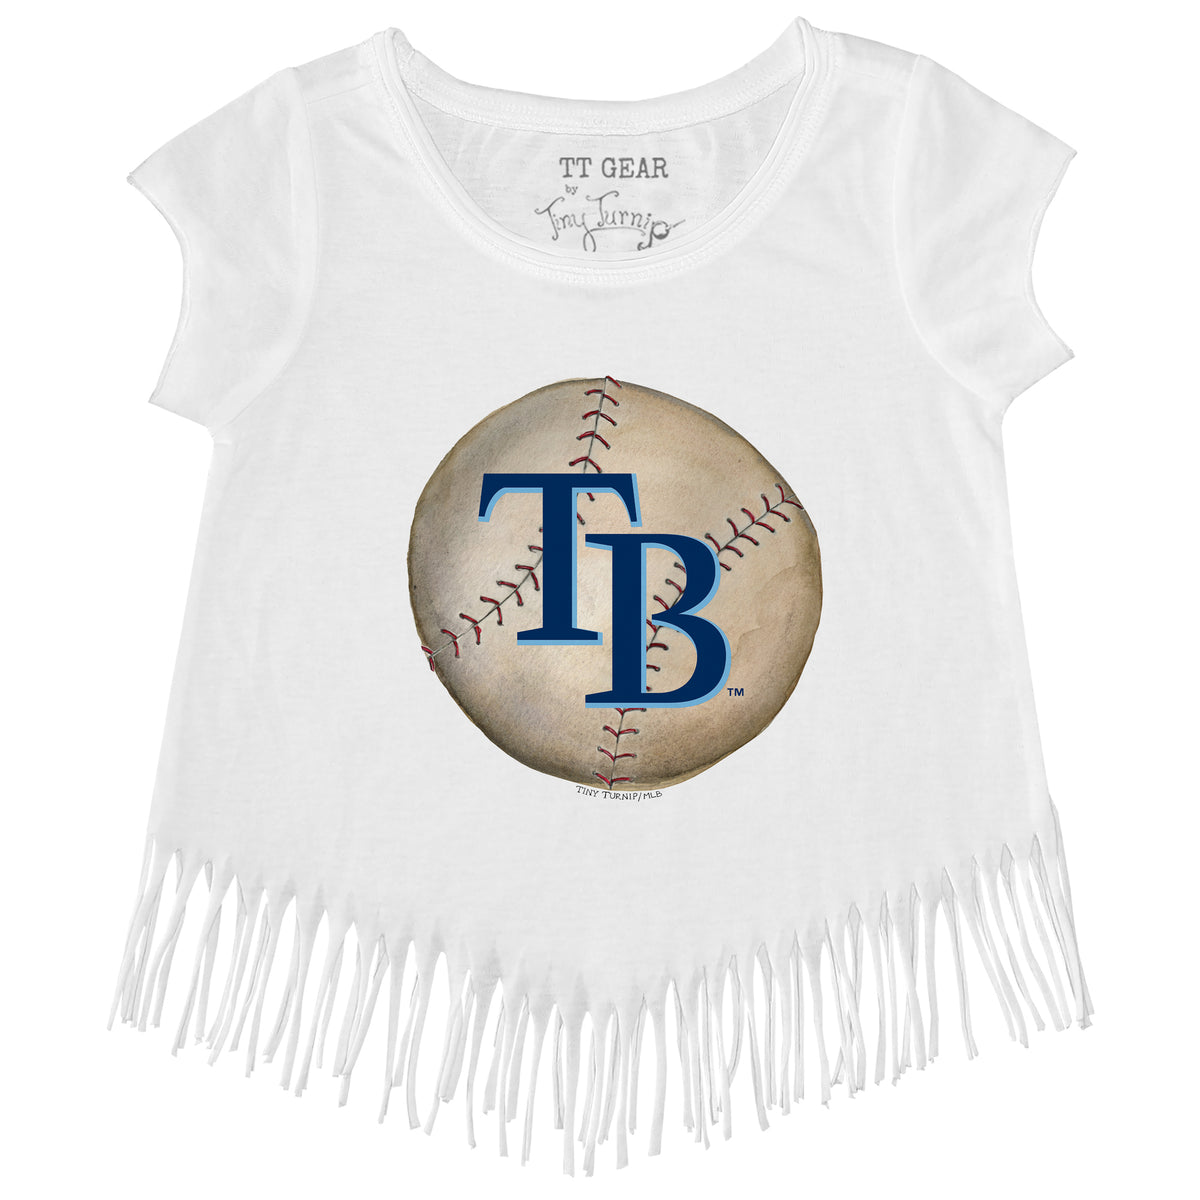 Lids Tampa Bay Rays Tiny Turnip Youth Baseball Cross Bats 3/4-Sleeve Raglan  T-Shirt - White/Navy